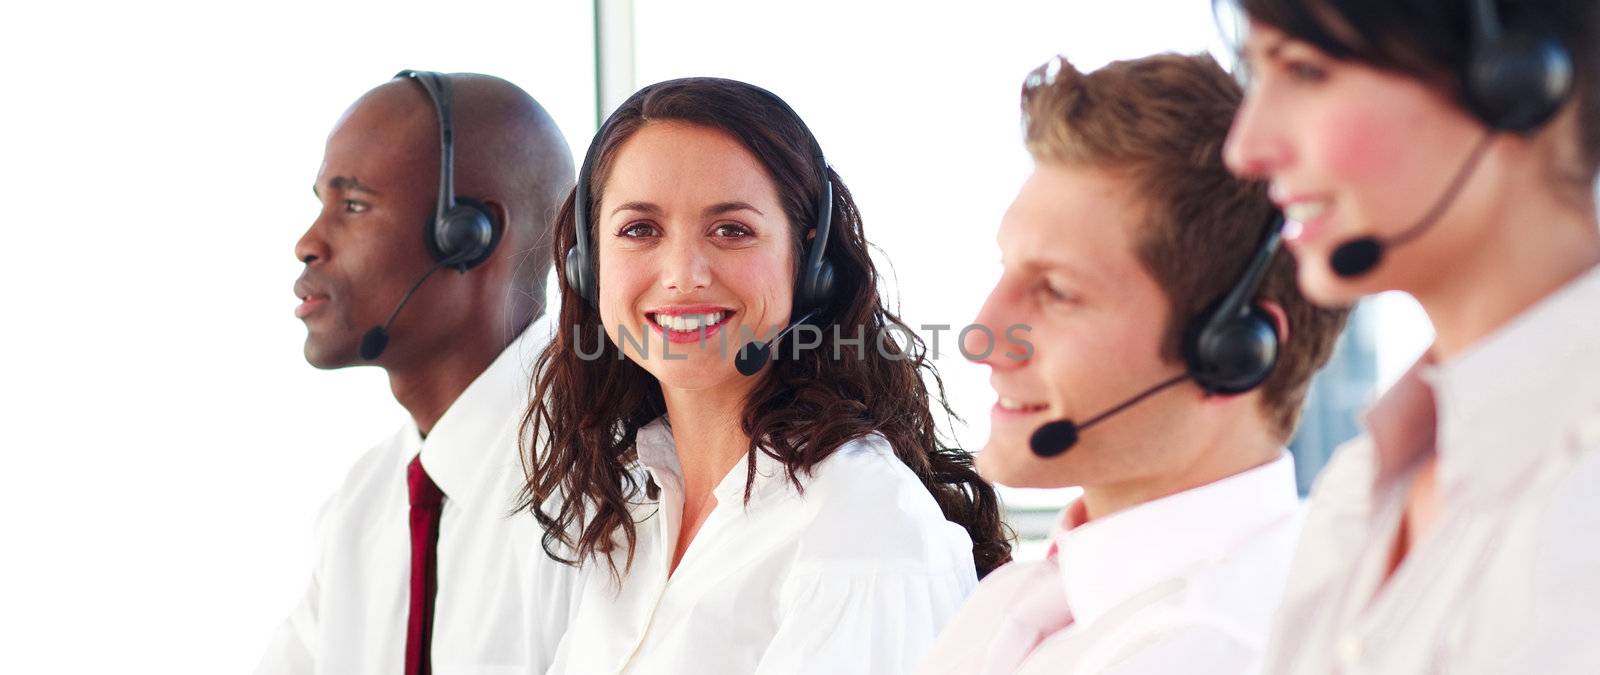 Portrait of a joyful sale representative team at work  by Wavebreakmedia